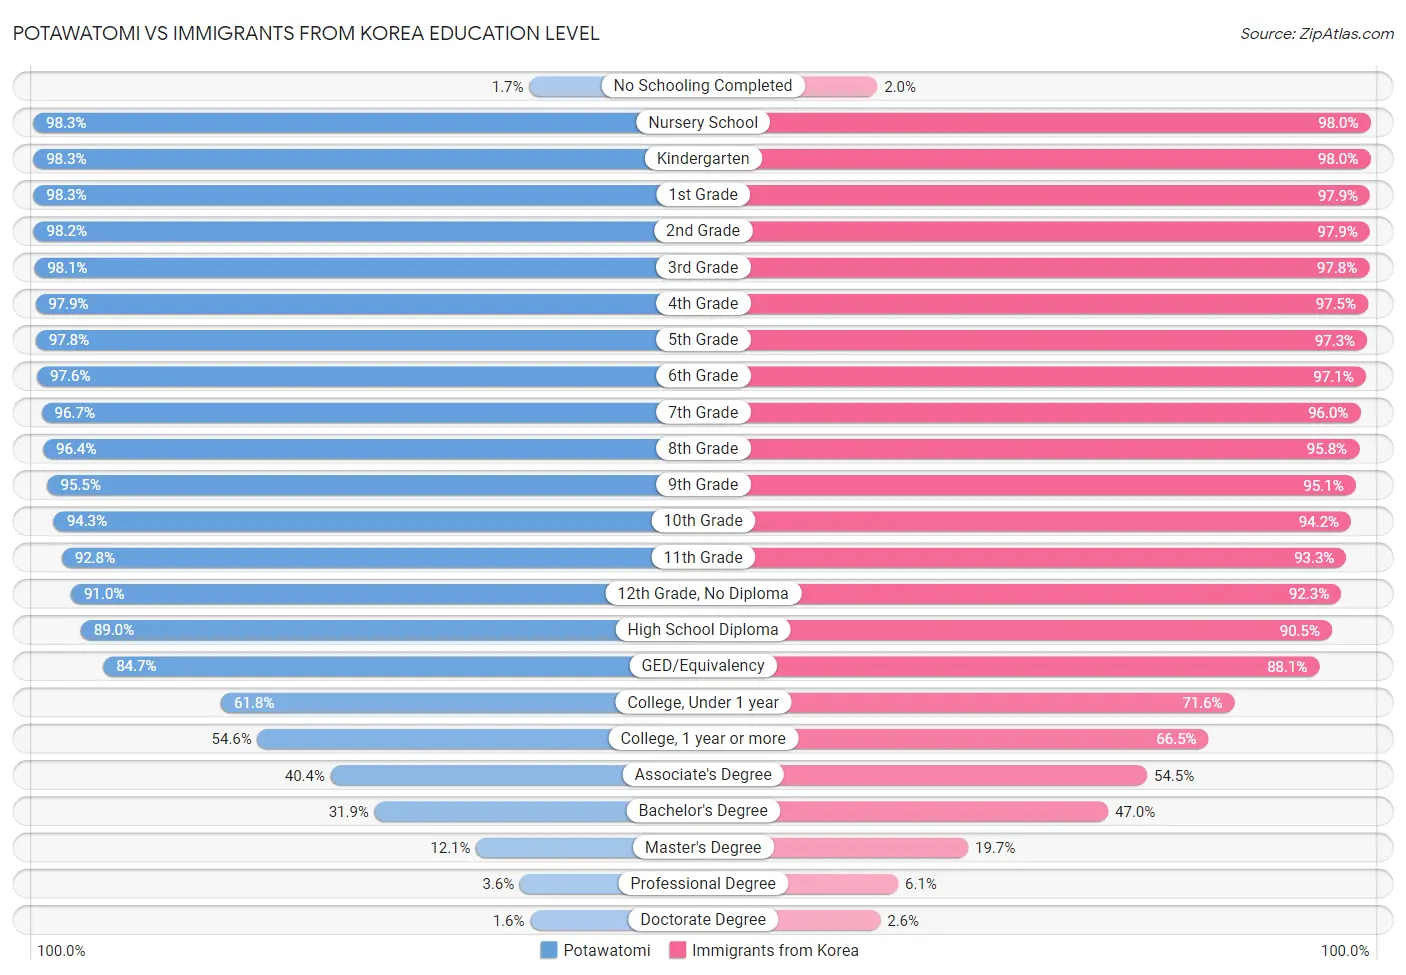 Potawatomi vs Immigrants from Korea Education Level